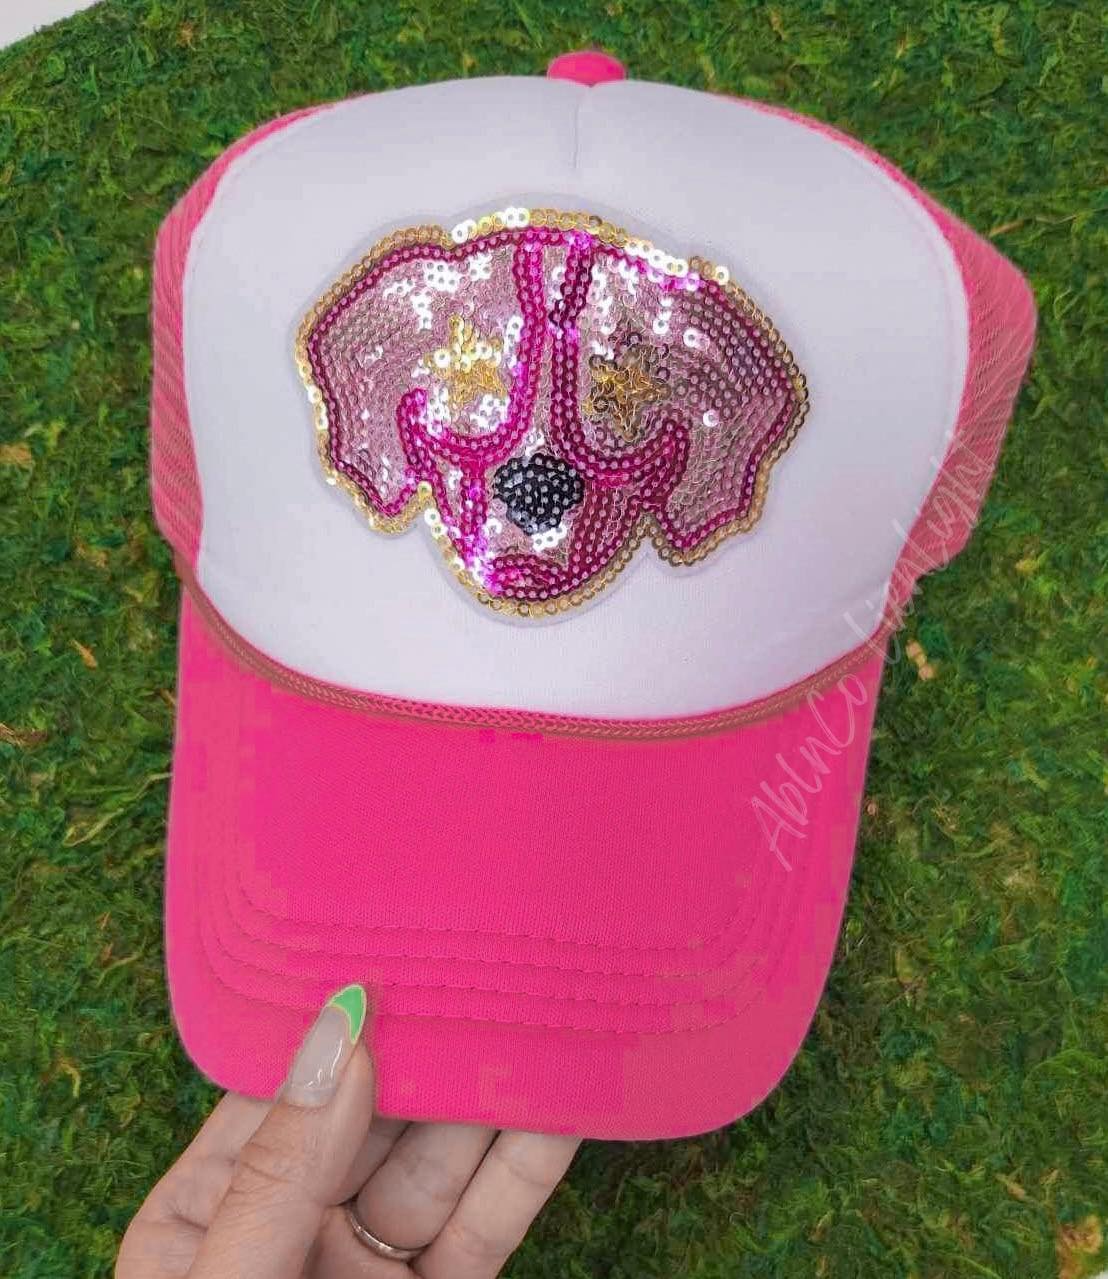 Preppy Pink Mascot™ Colonel Reb Trucker Hat